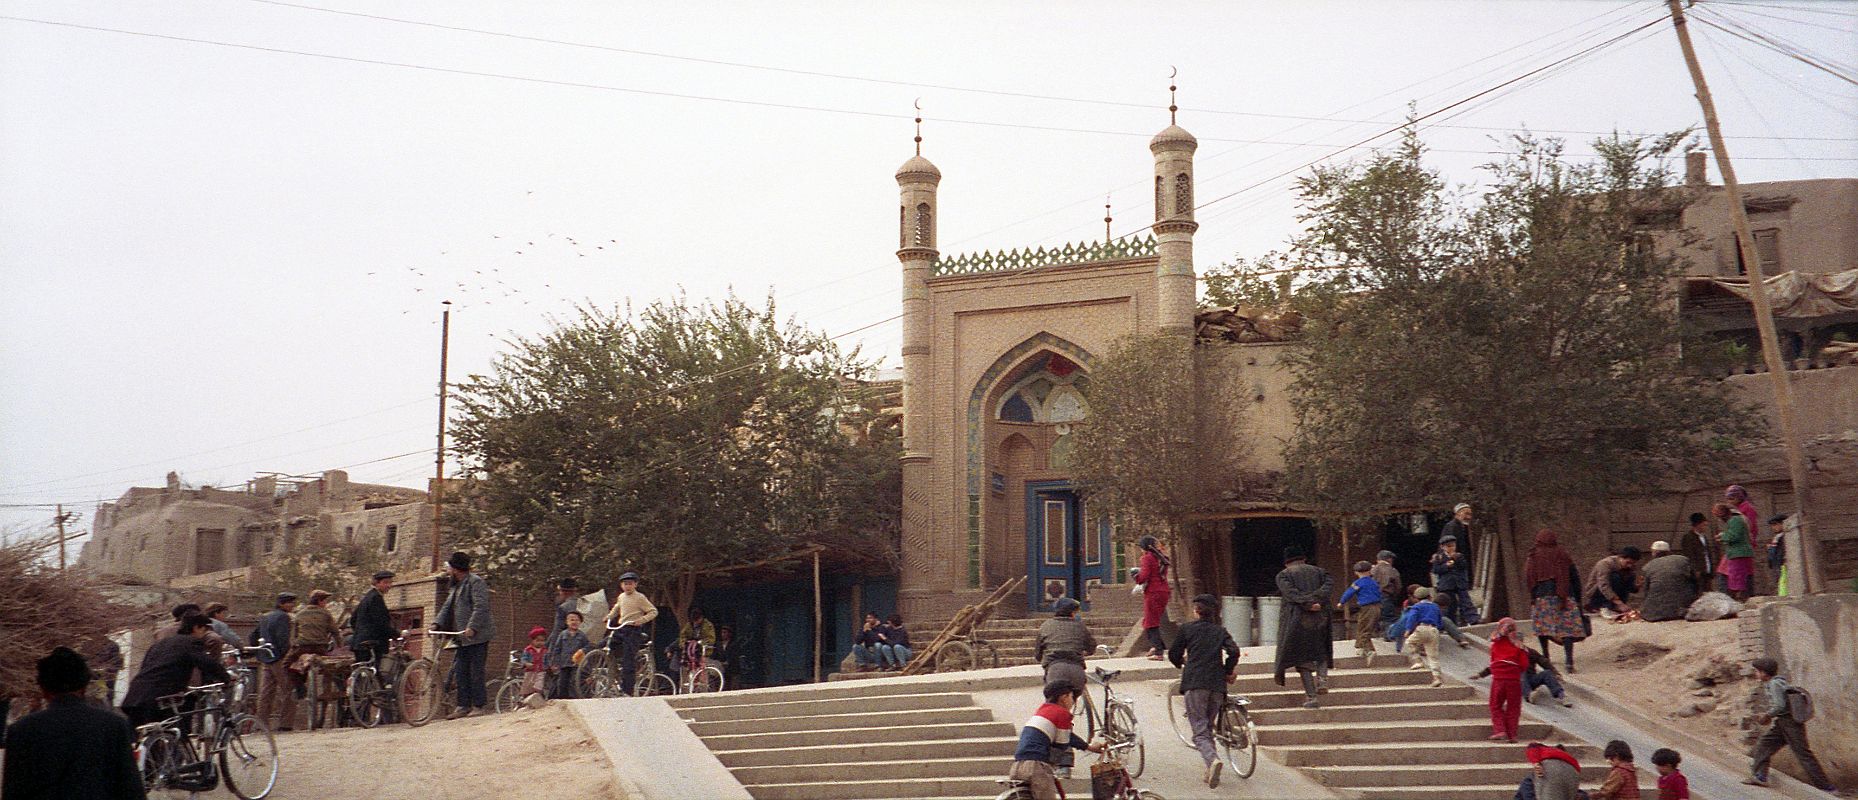 23 Kashgar Old City Street Scene 1993 Old Mosque